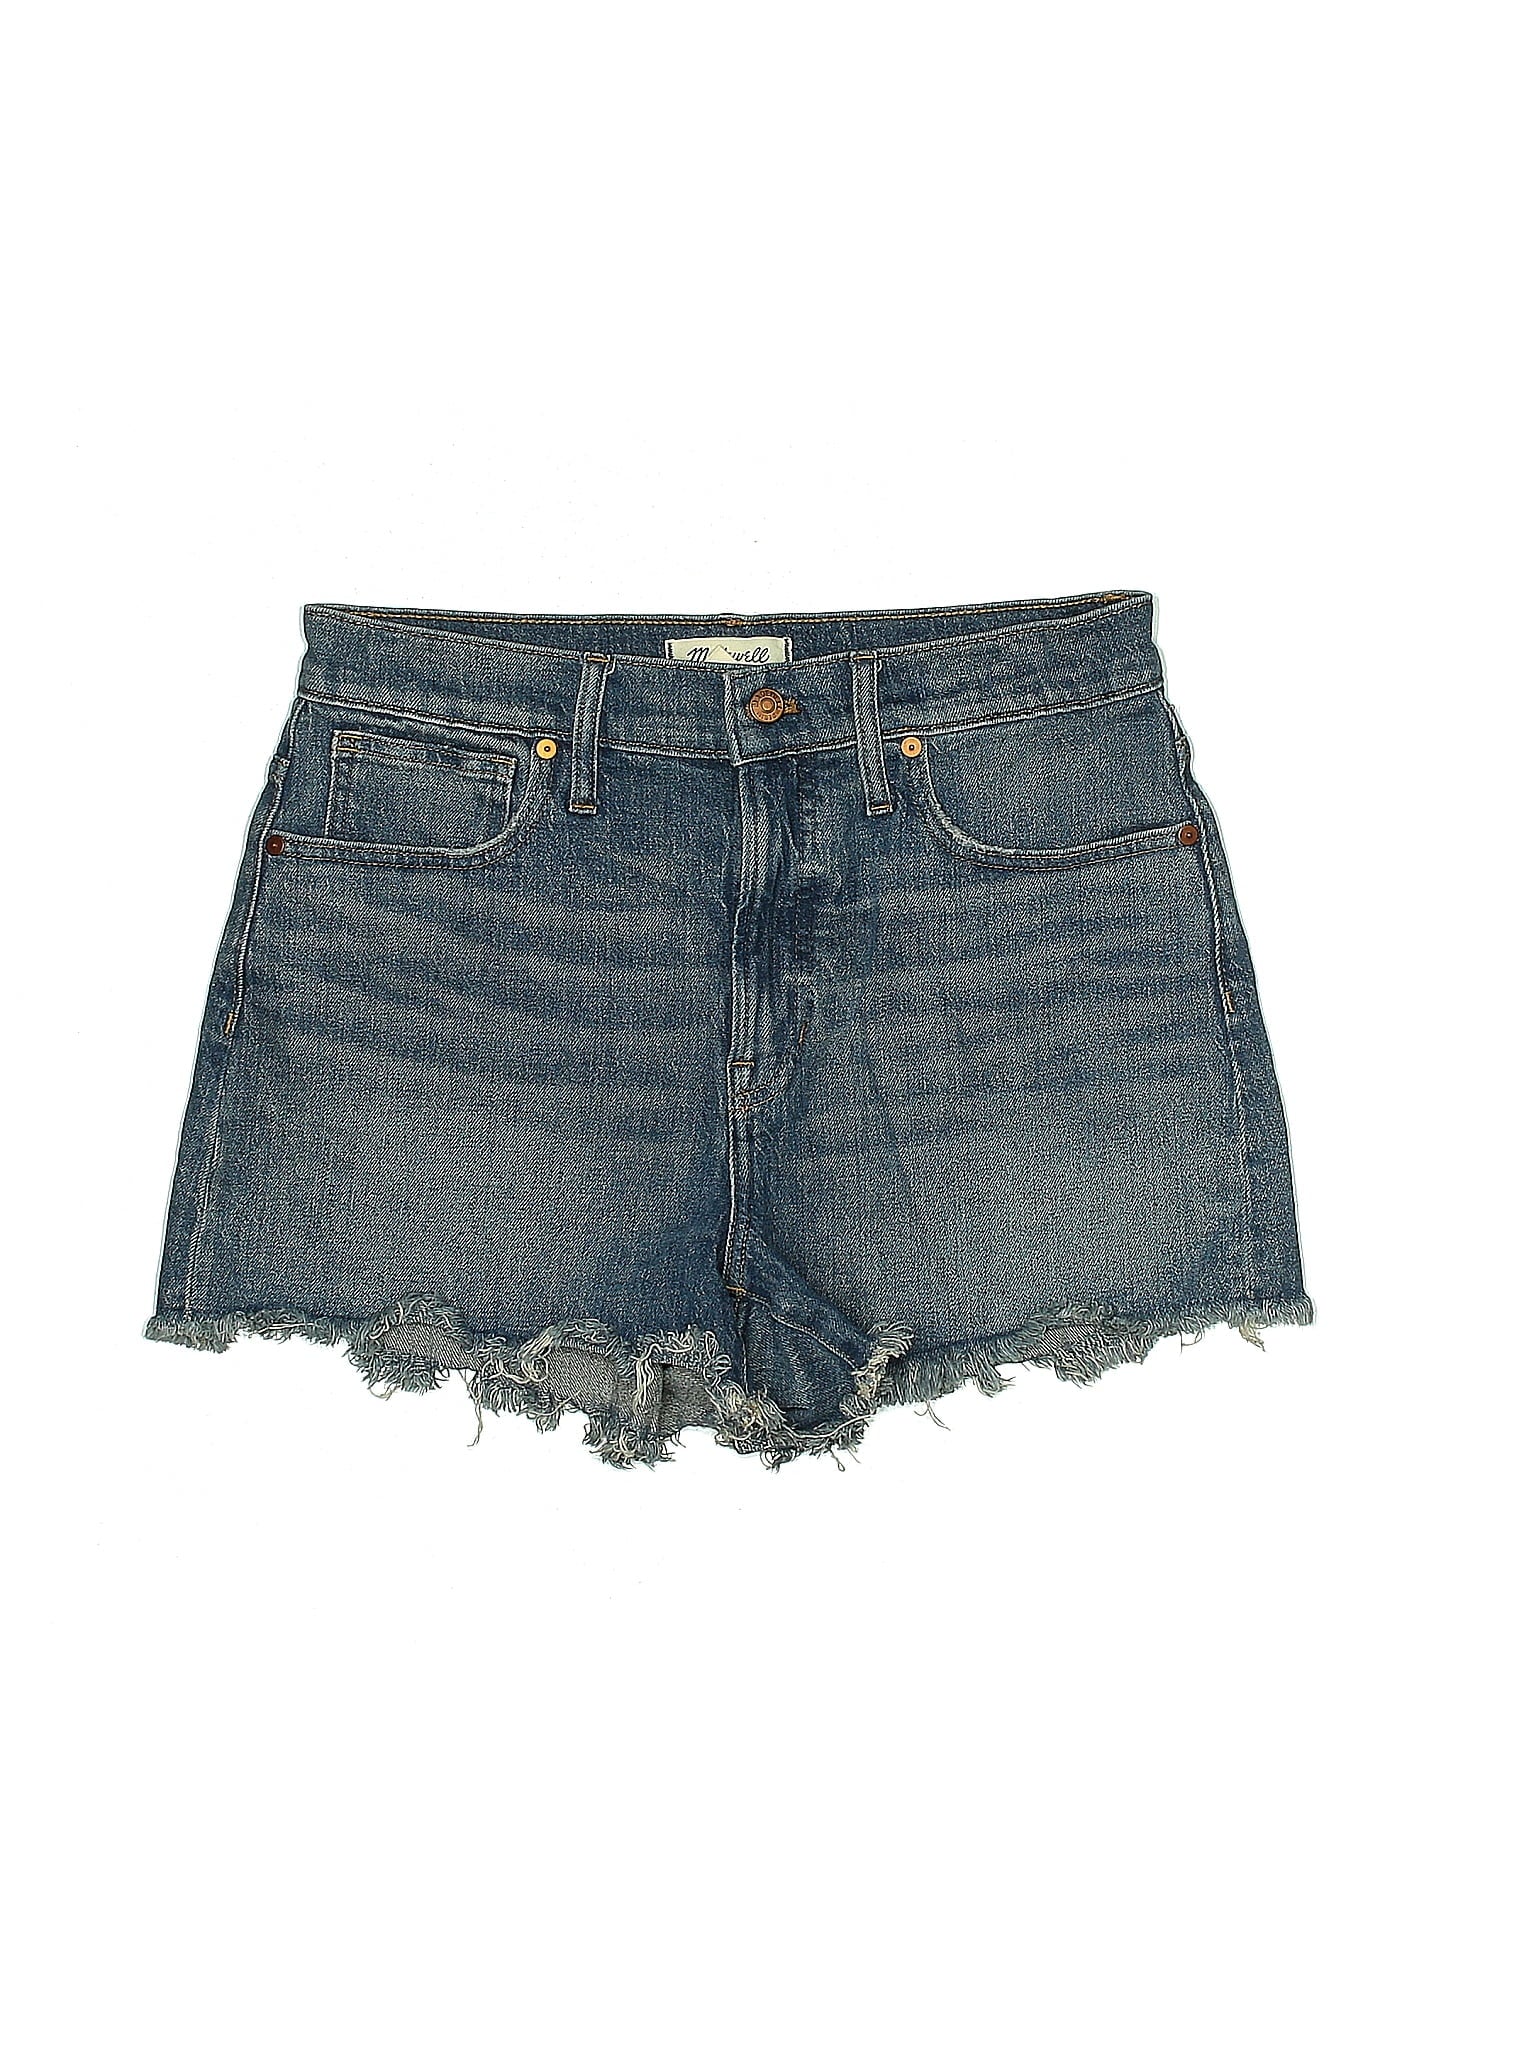 High-Rise Denim Shorts in Dark Wash waist size - 29